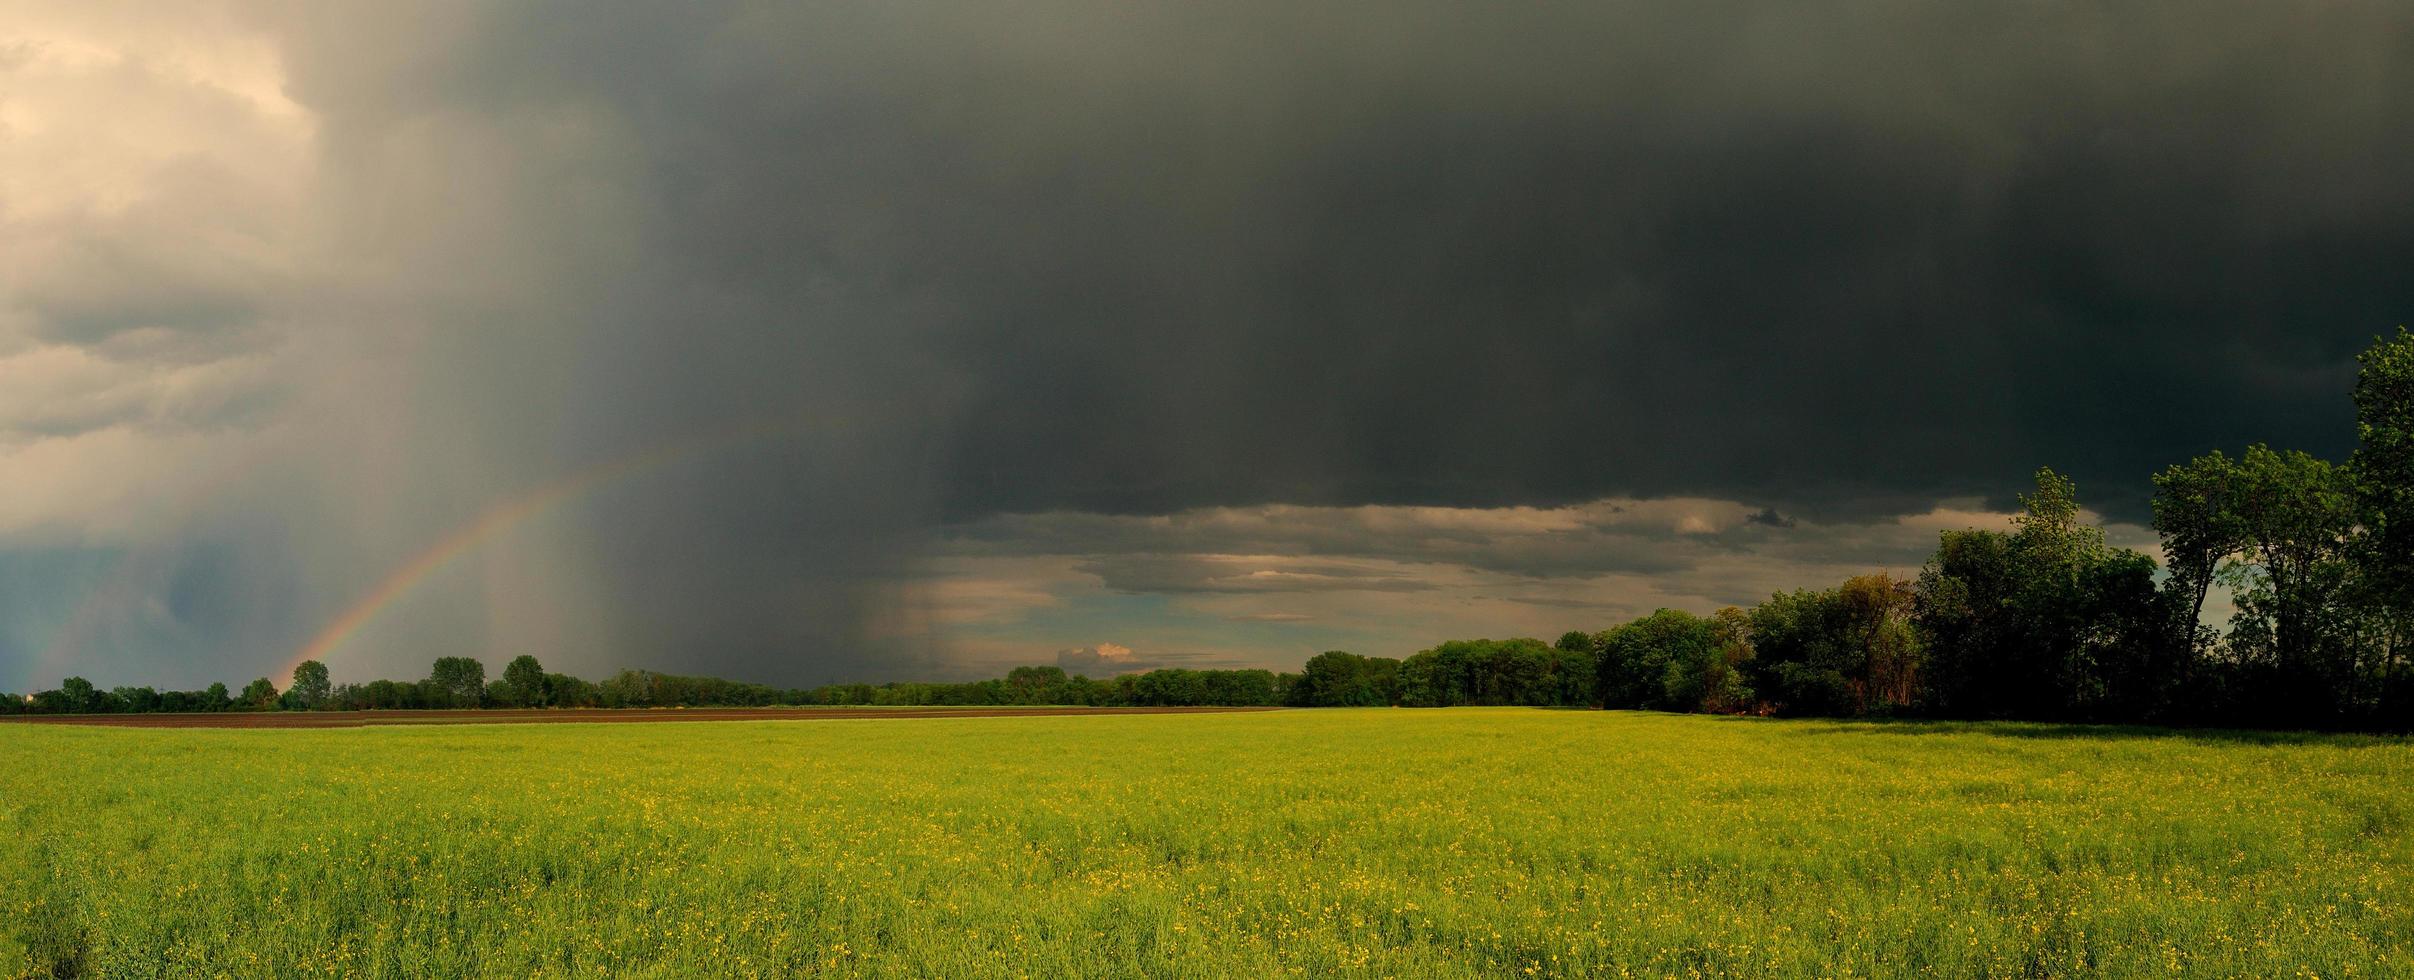 rainbow panorama with field photo